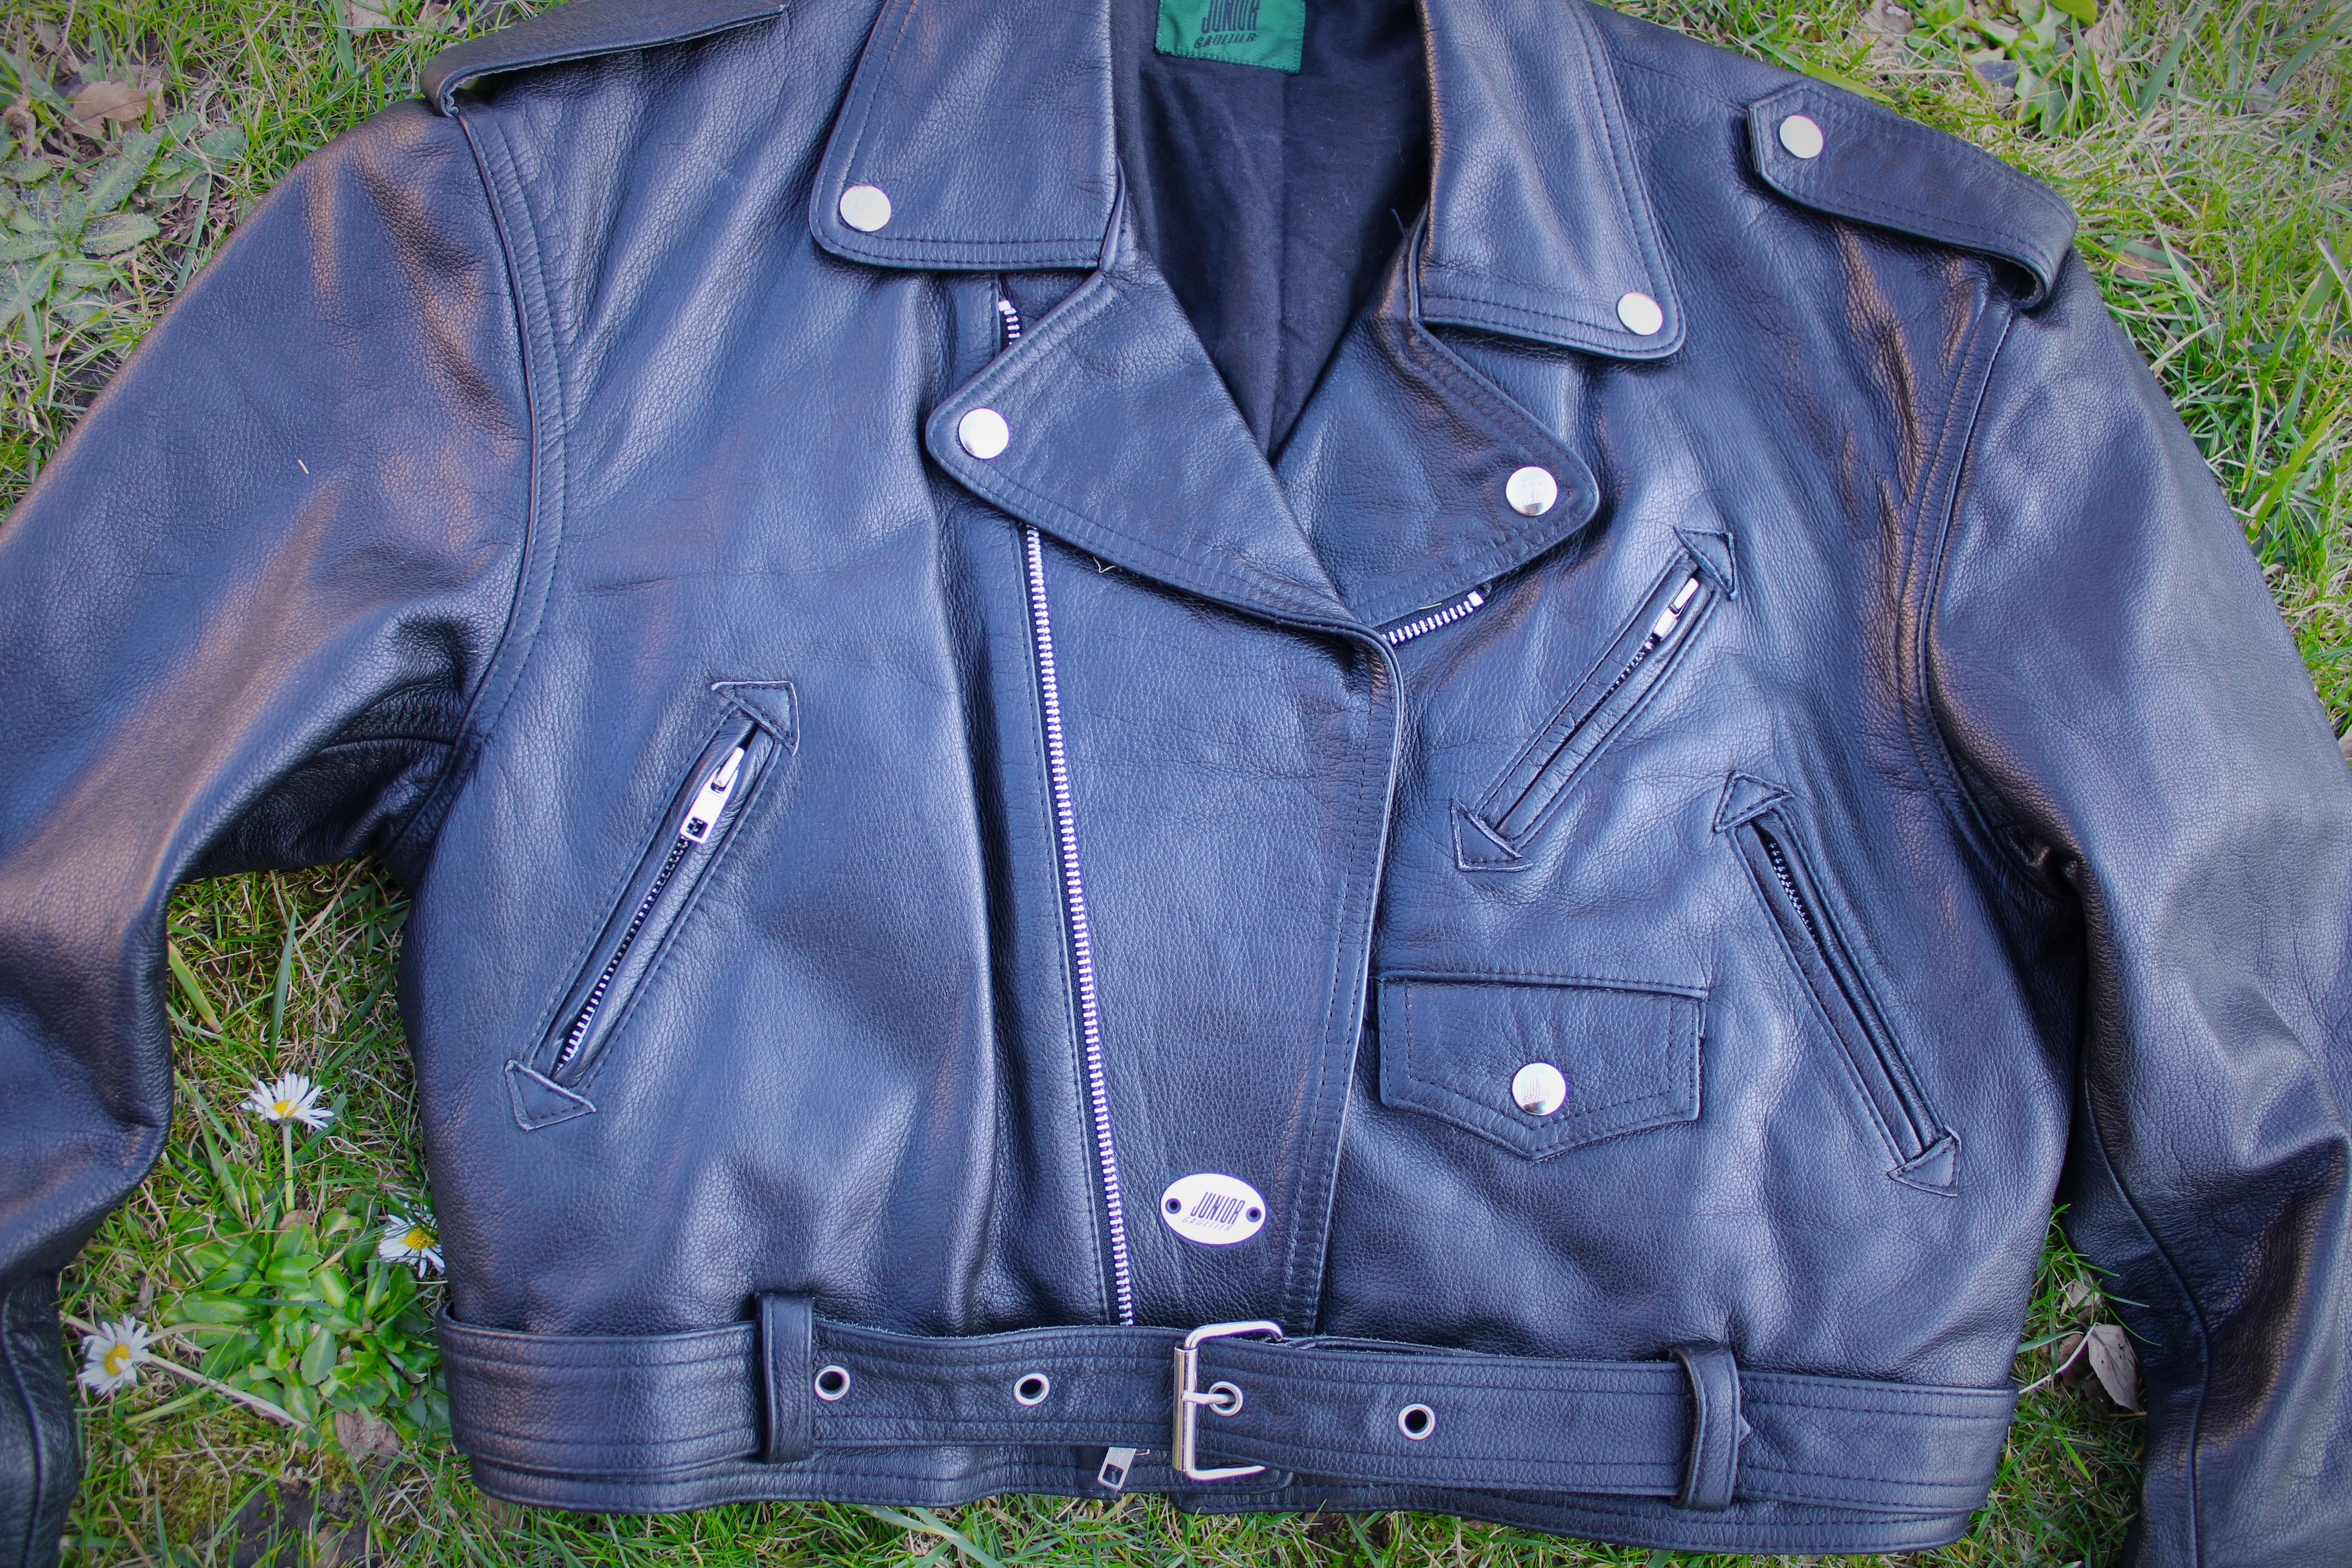 Black Jean Paul Gaultier Bella Hadid Leather Biker Motorcycle Vintage Punk Coat Jacket For Sale